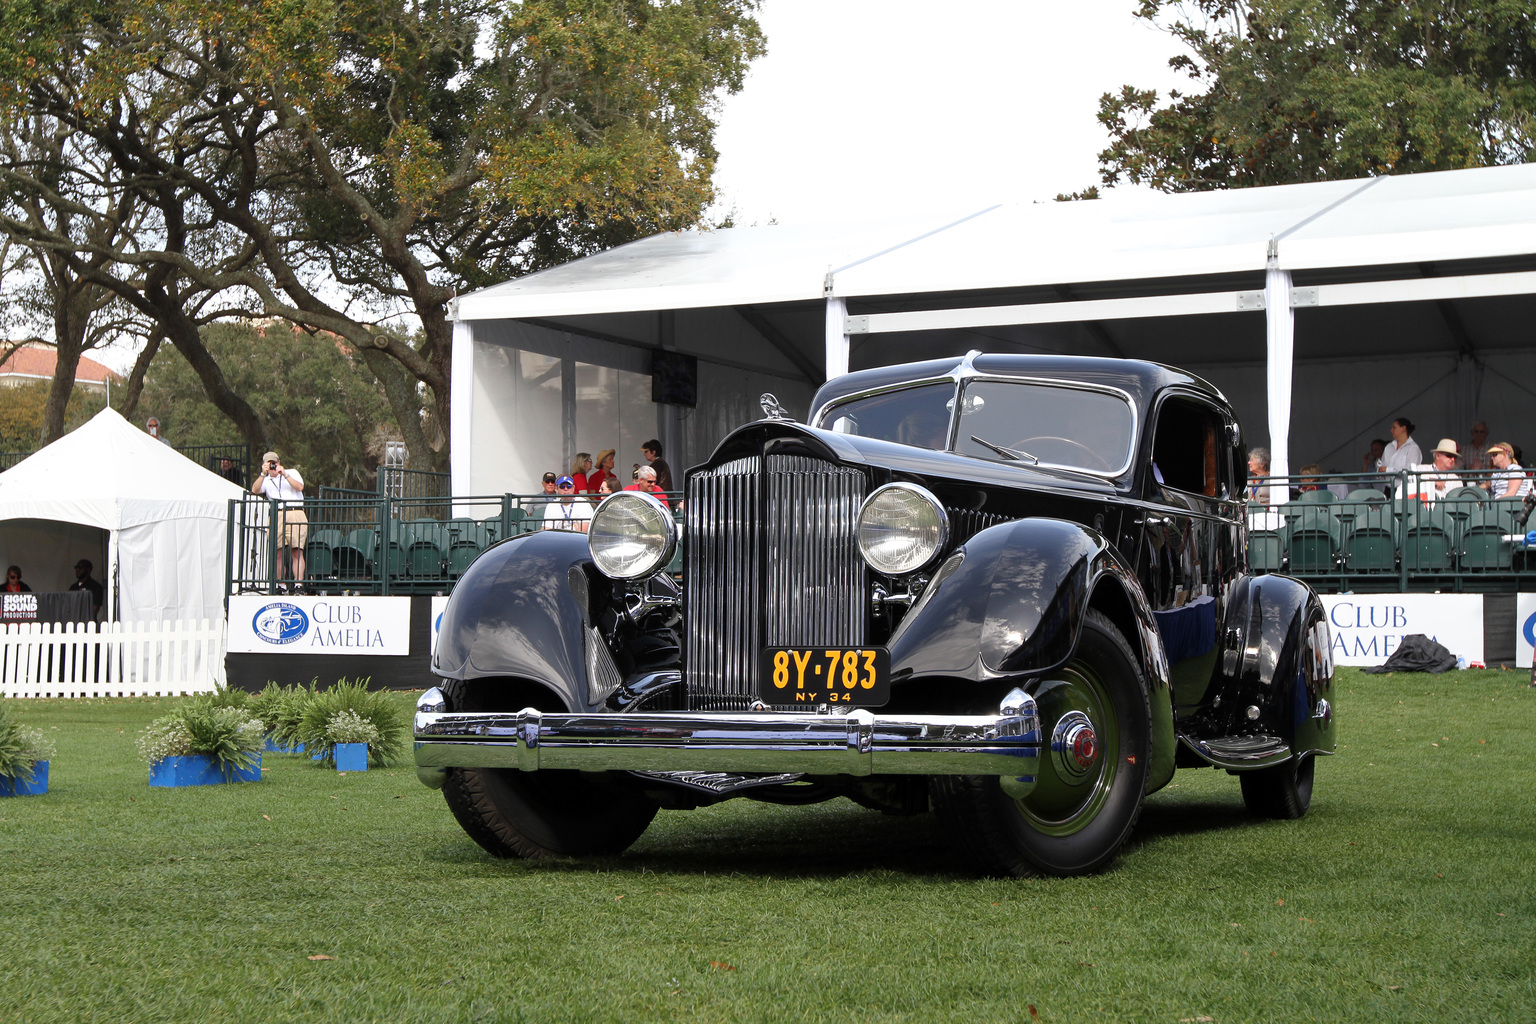 1934 Packard Twelve Model 1107